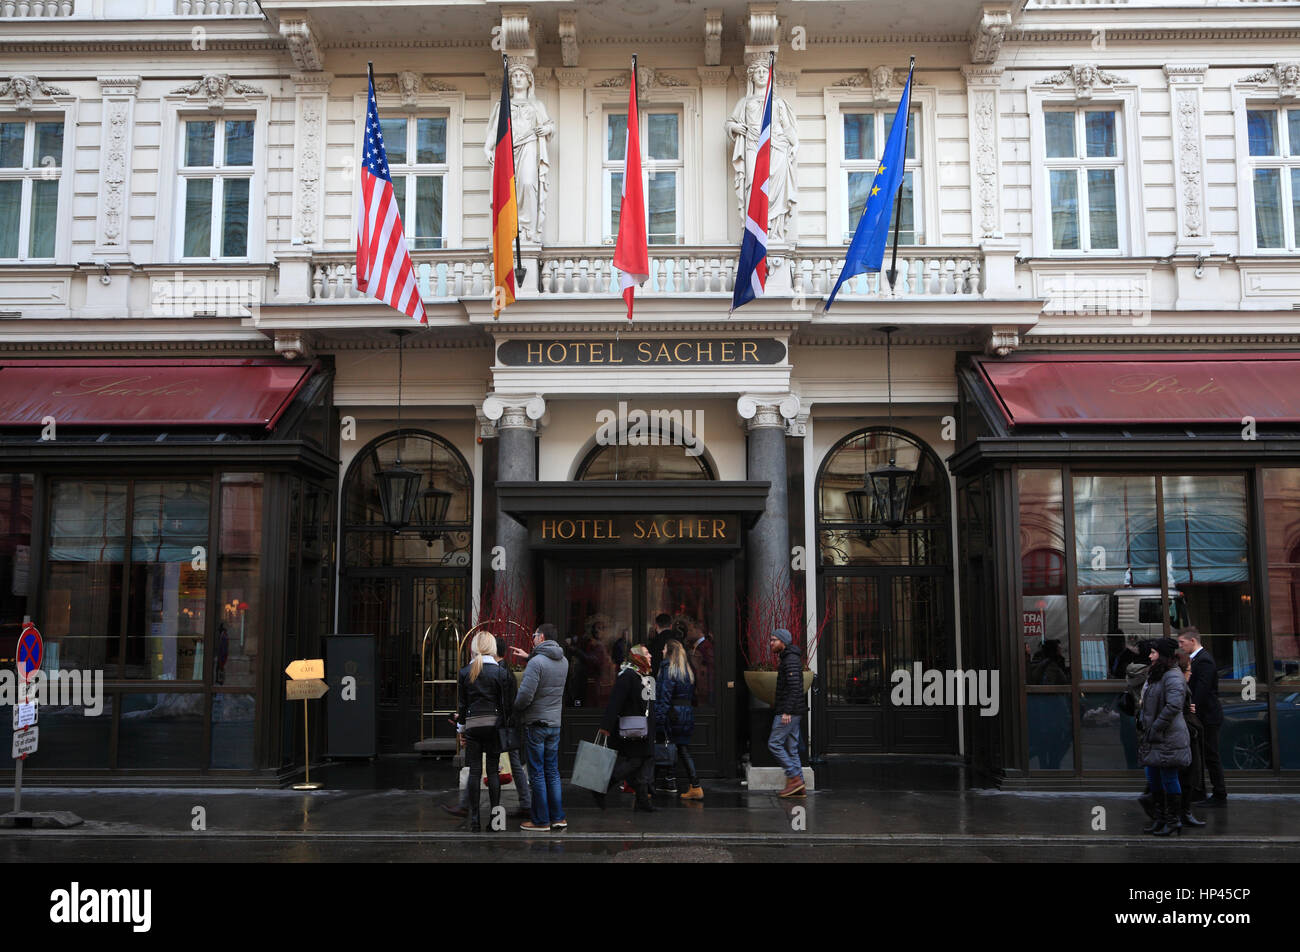 Hotel SACHER, entrance, Vienna, Austria, Europe Stock Photo